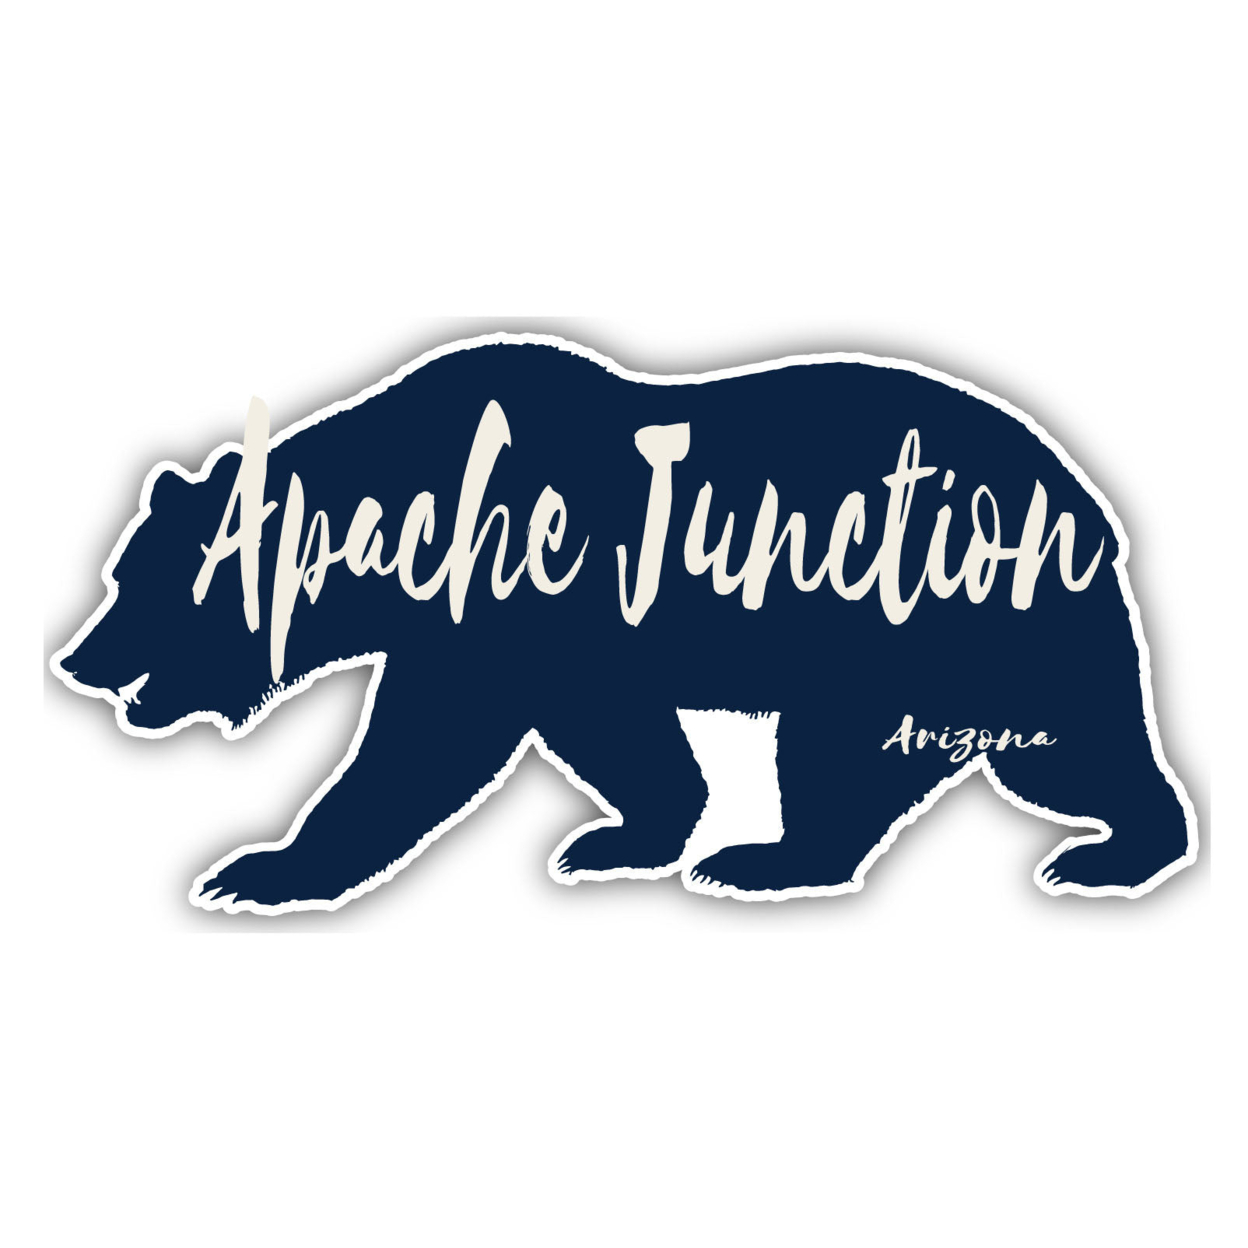 Apache Junction Arizona Souvenir Decorative Stickers (Choose Theme And Size) - 4-Pack, 10-Inch, Bear